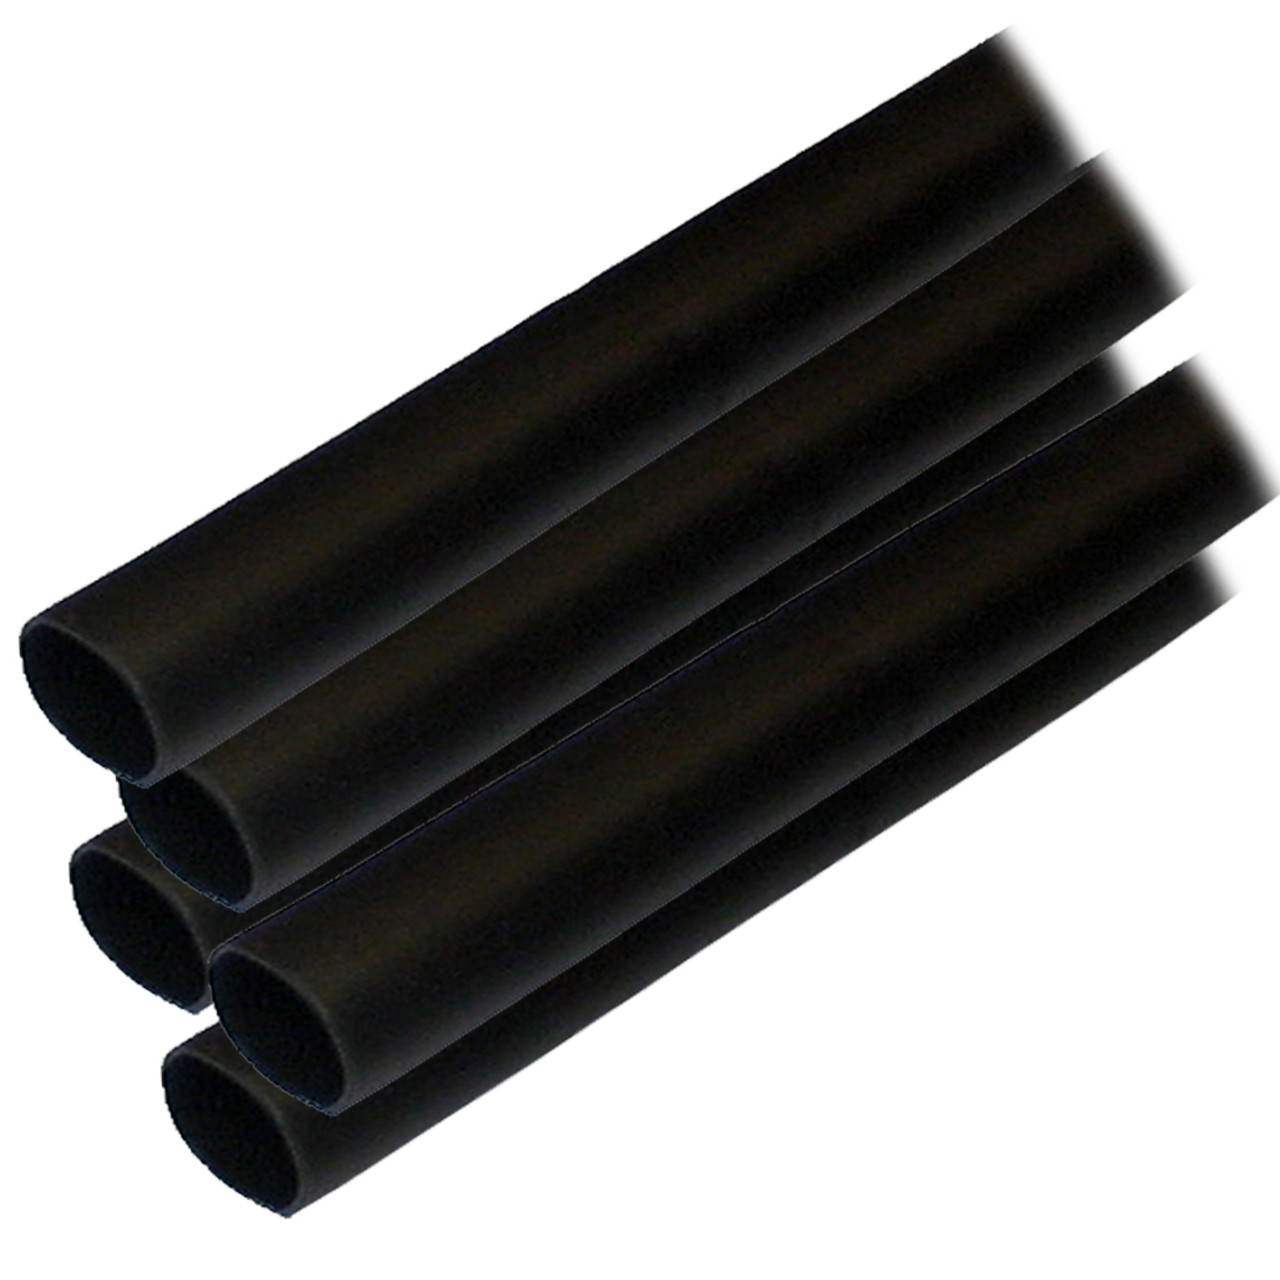 Ancor Adhesive Lined Heat Shrink Tubing (ALT) - 1\/2" x 6" - 5-Pack - Black [305106]